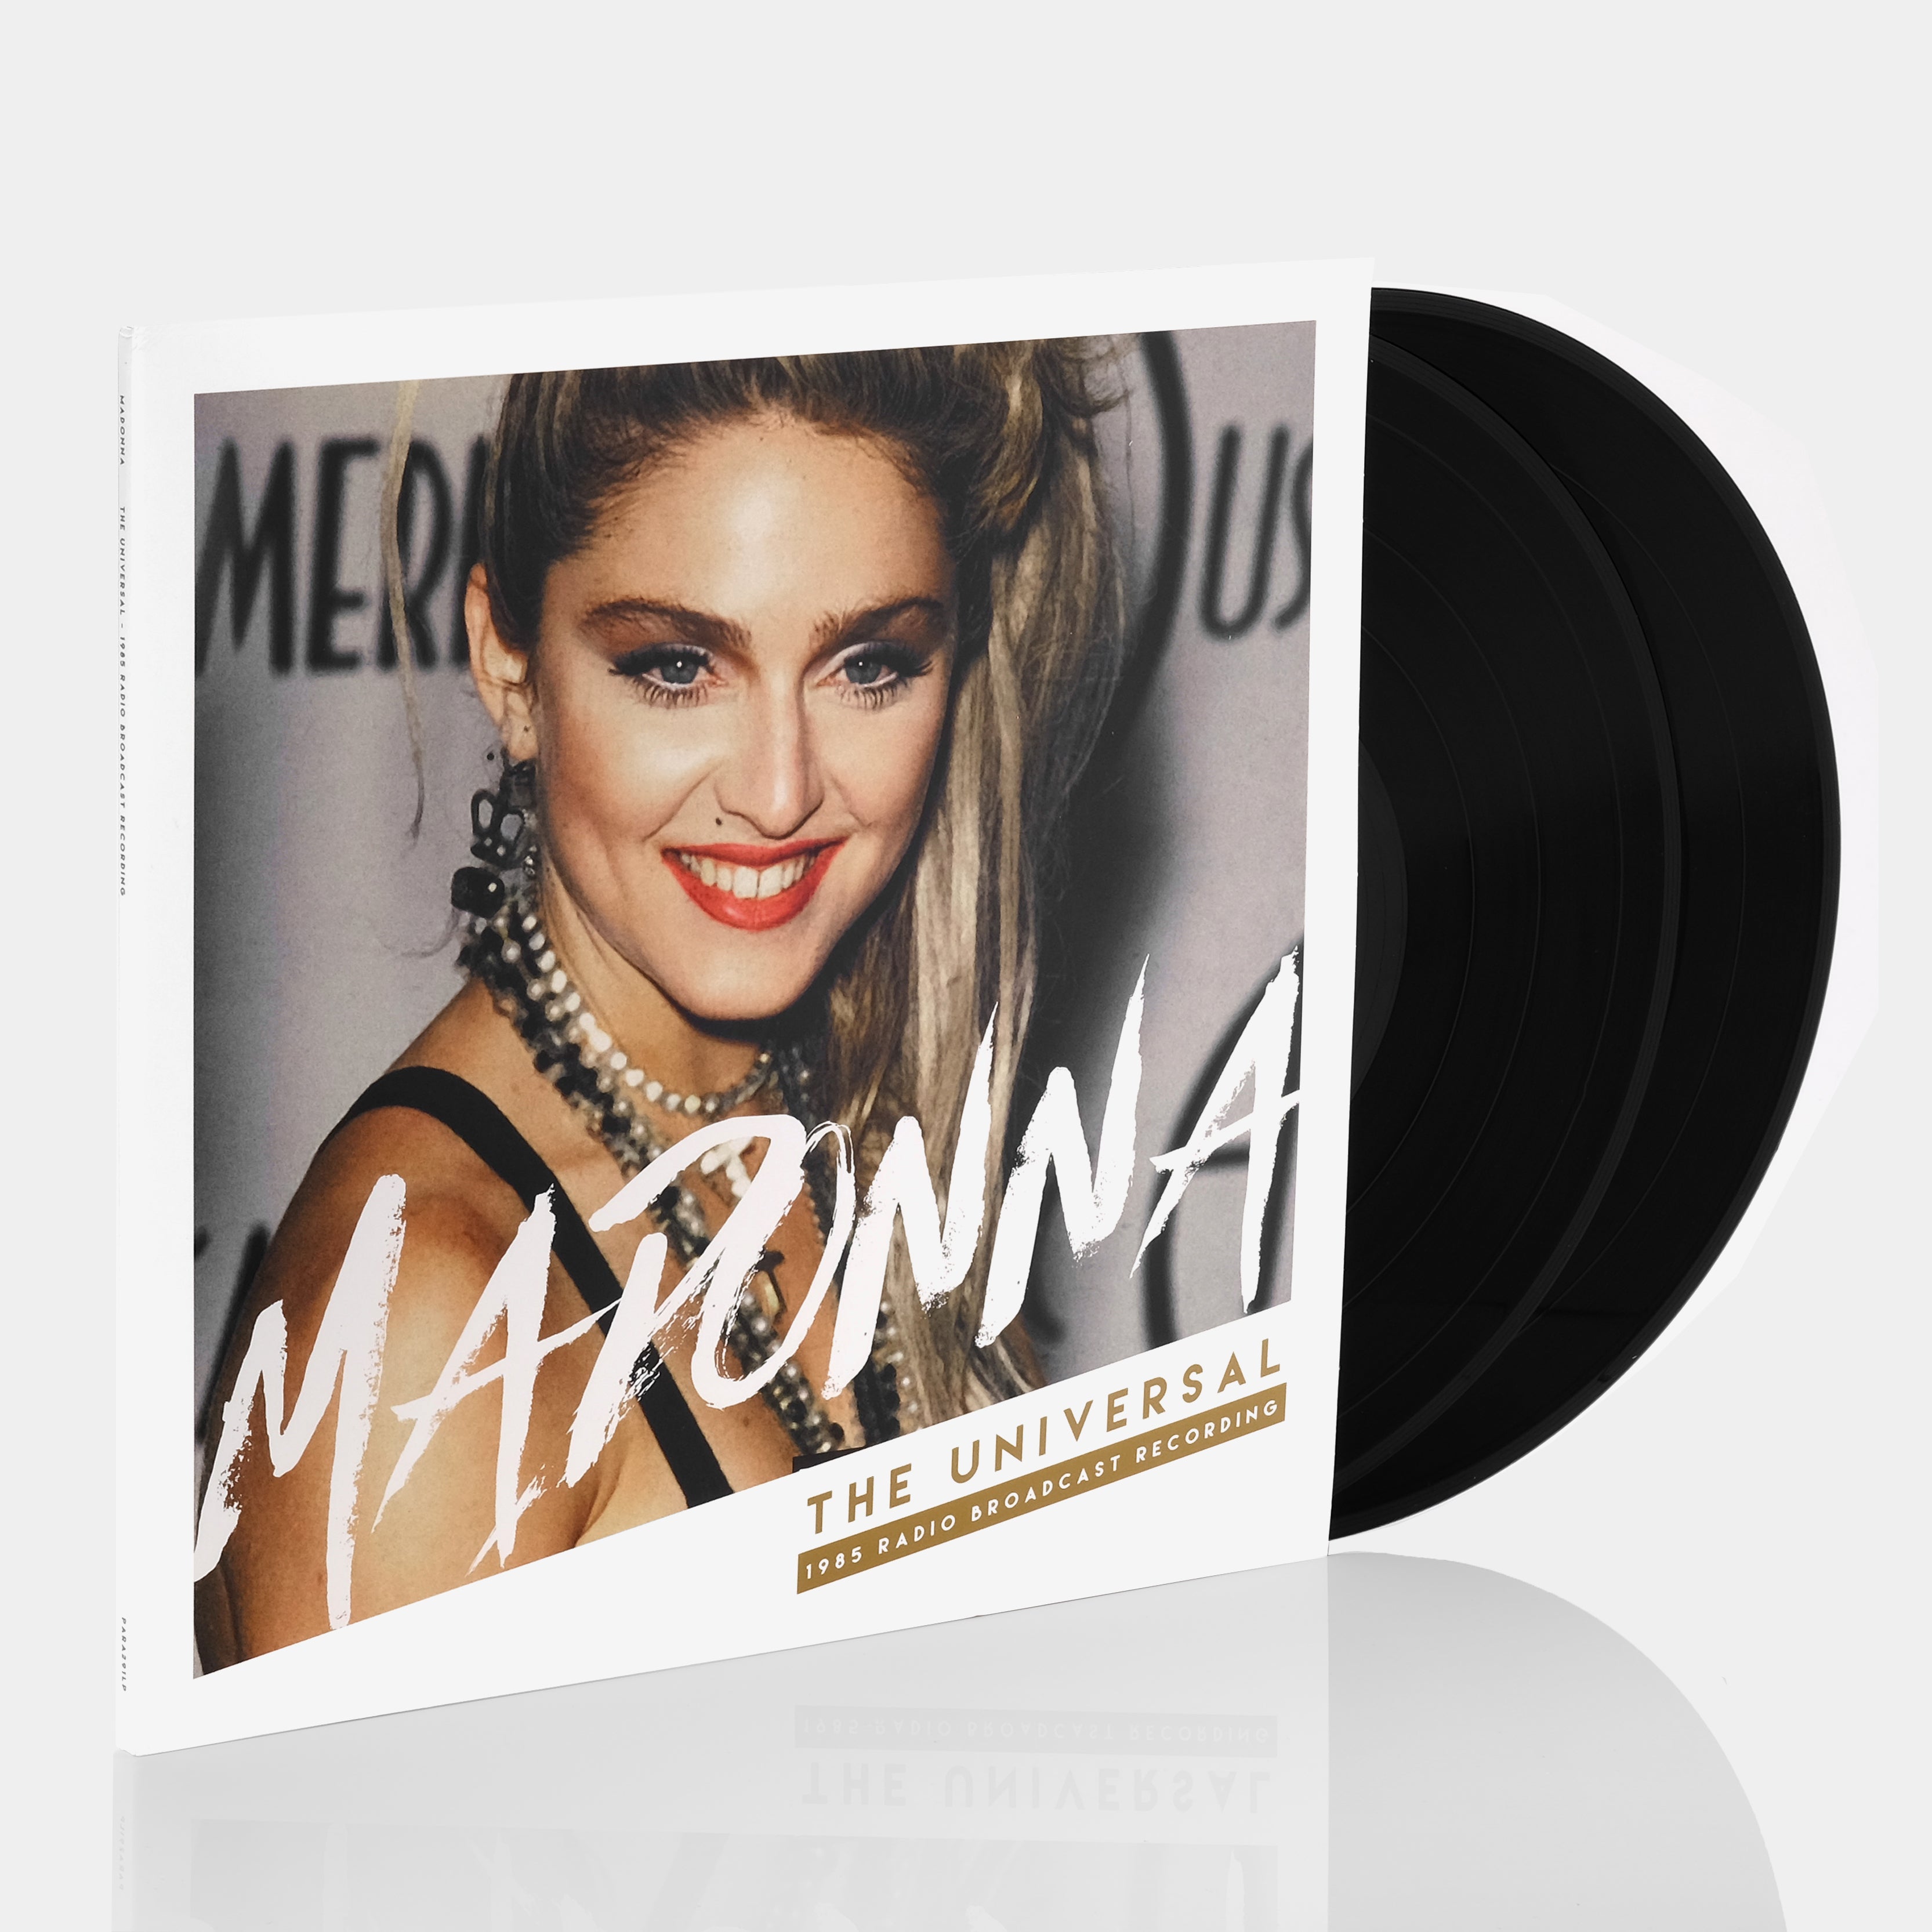 Madonna - The Universal: 1985 Radio Broadcast Recording 2xLP Vinyl Record